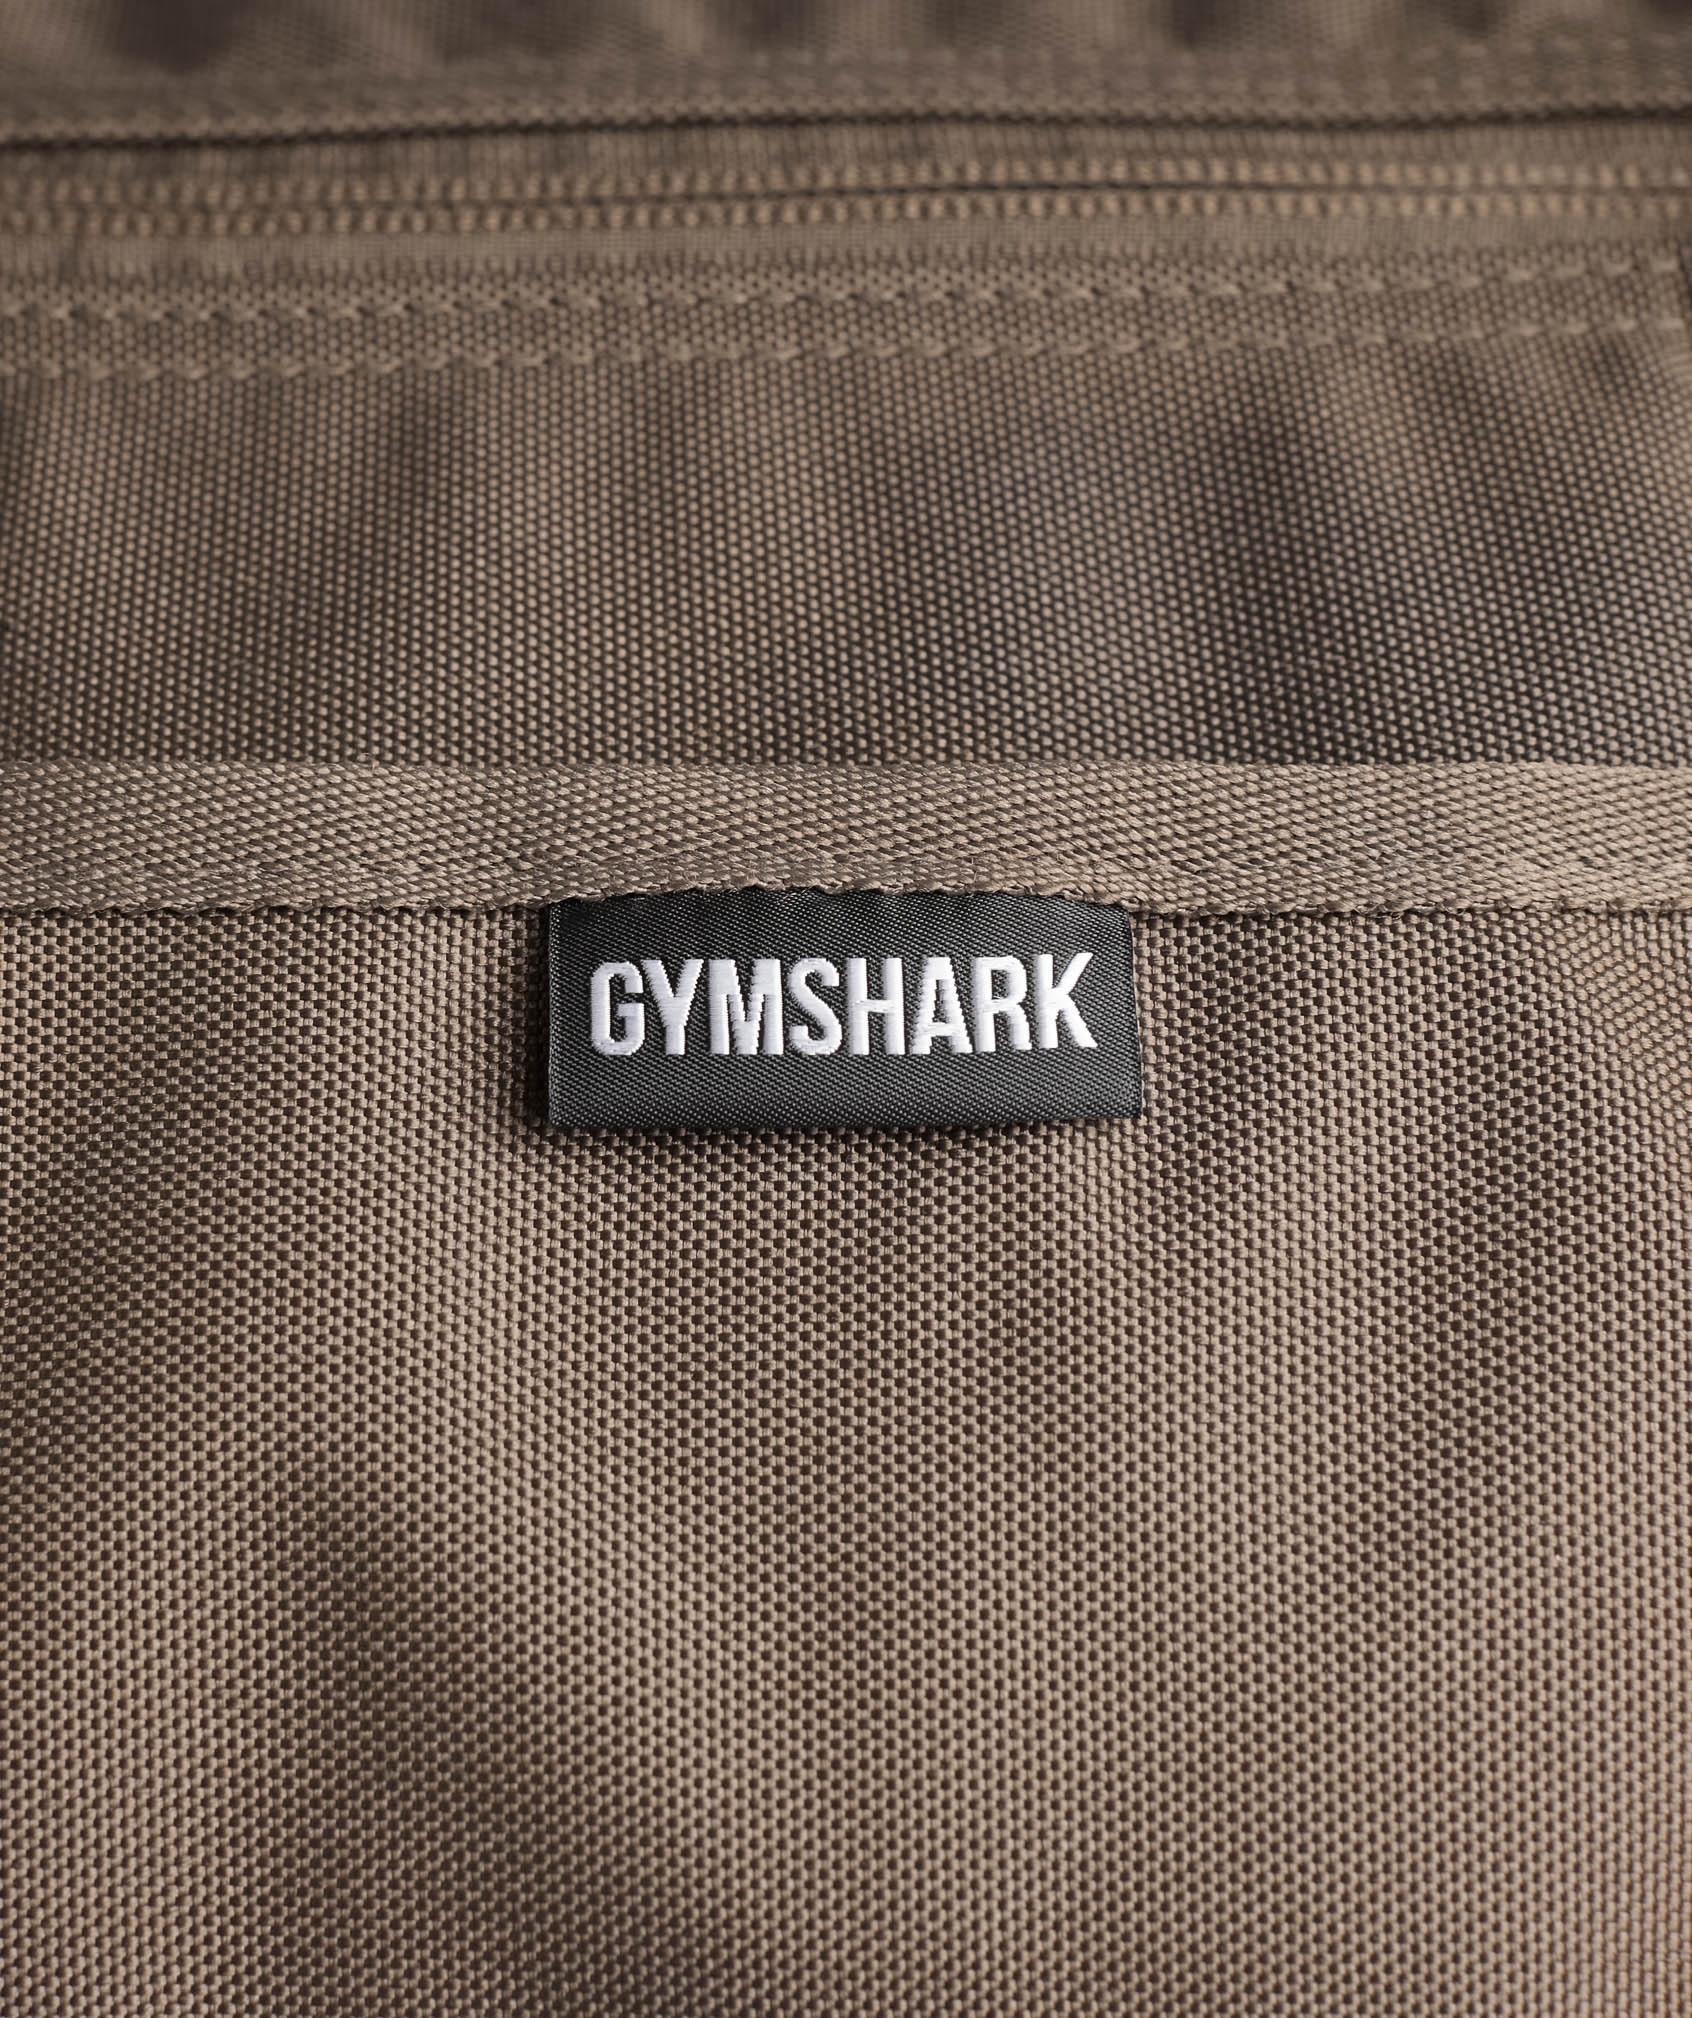 Sharkhead Gym Bag in Camo Brown - view 5